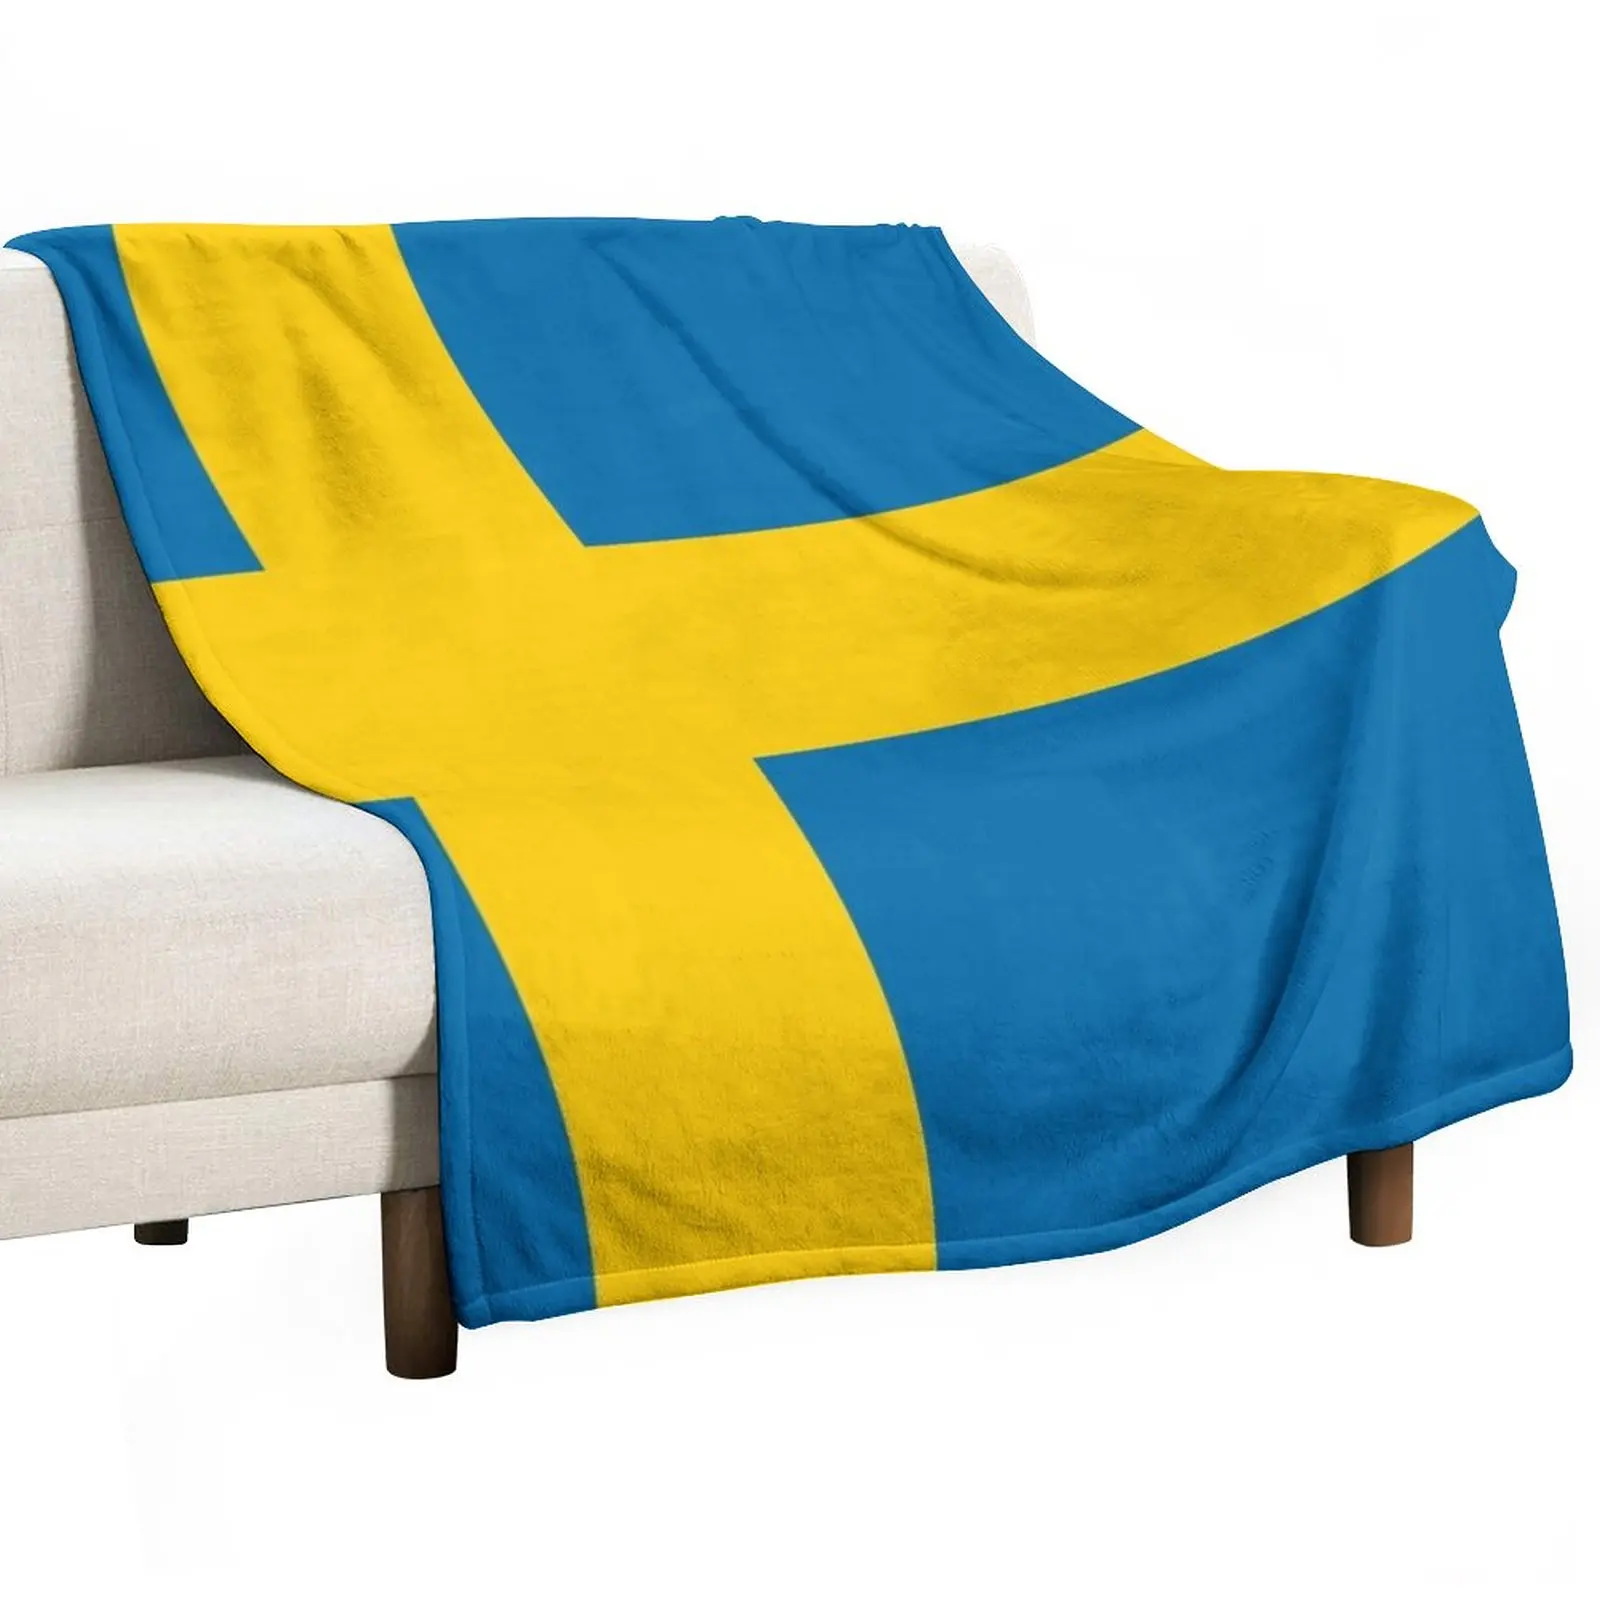 

Шведский флаг Швеции, плед, одеяло для малышей, тяжелые одеяла, пушистые одеяла, большое одеяло